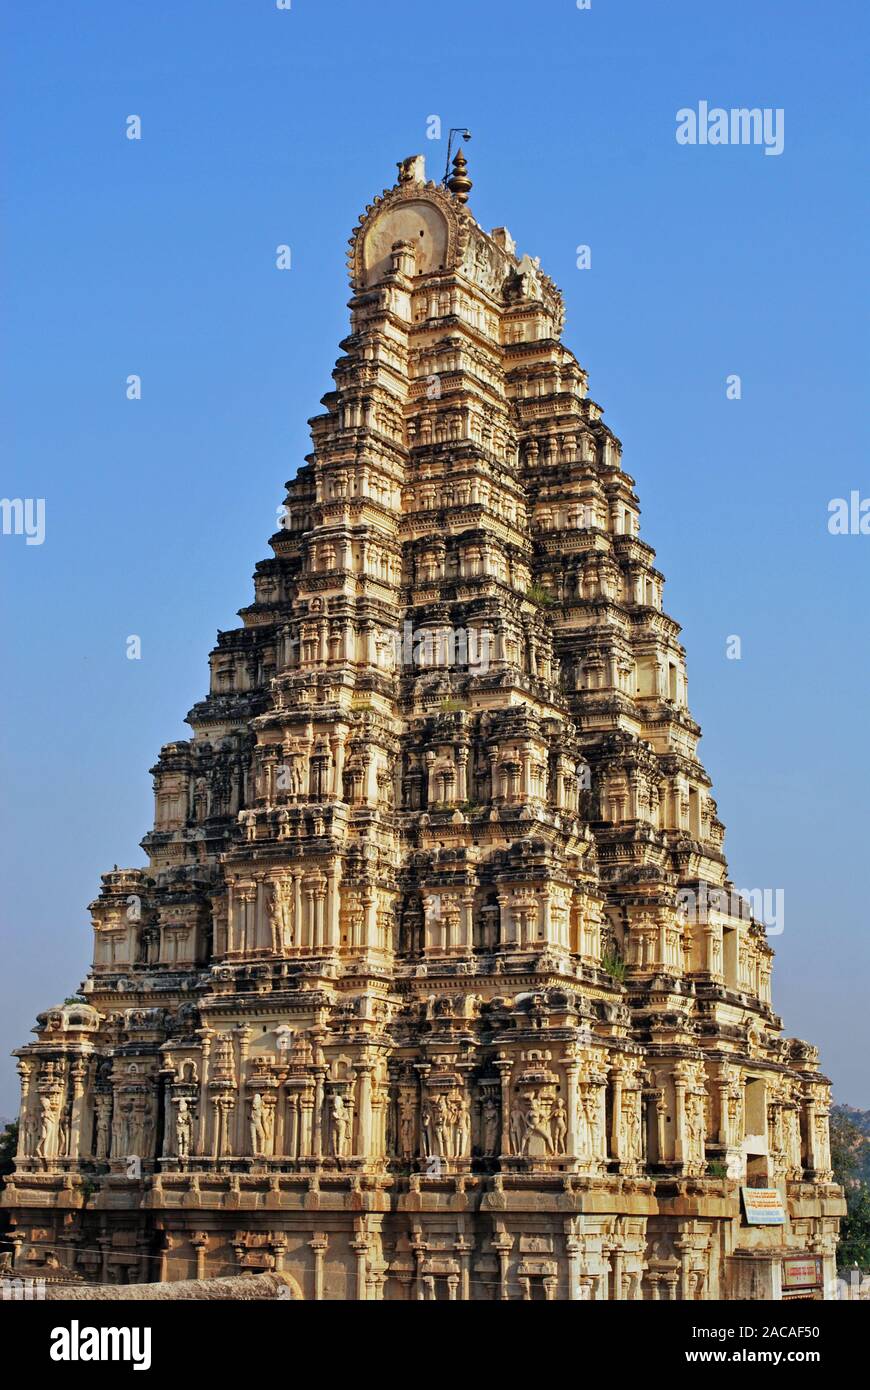 Virupaksha temple in Hampi, southern India Stock Photo